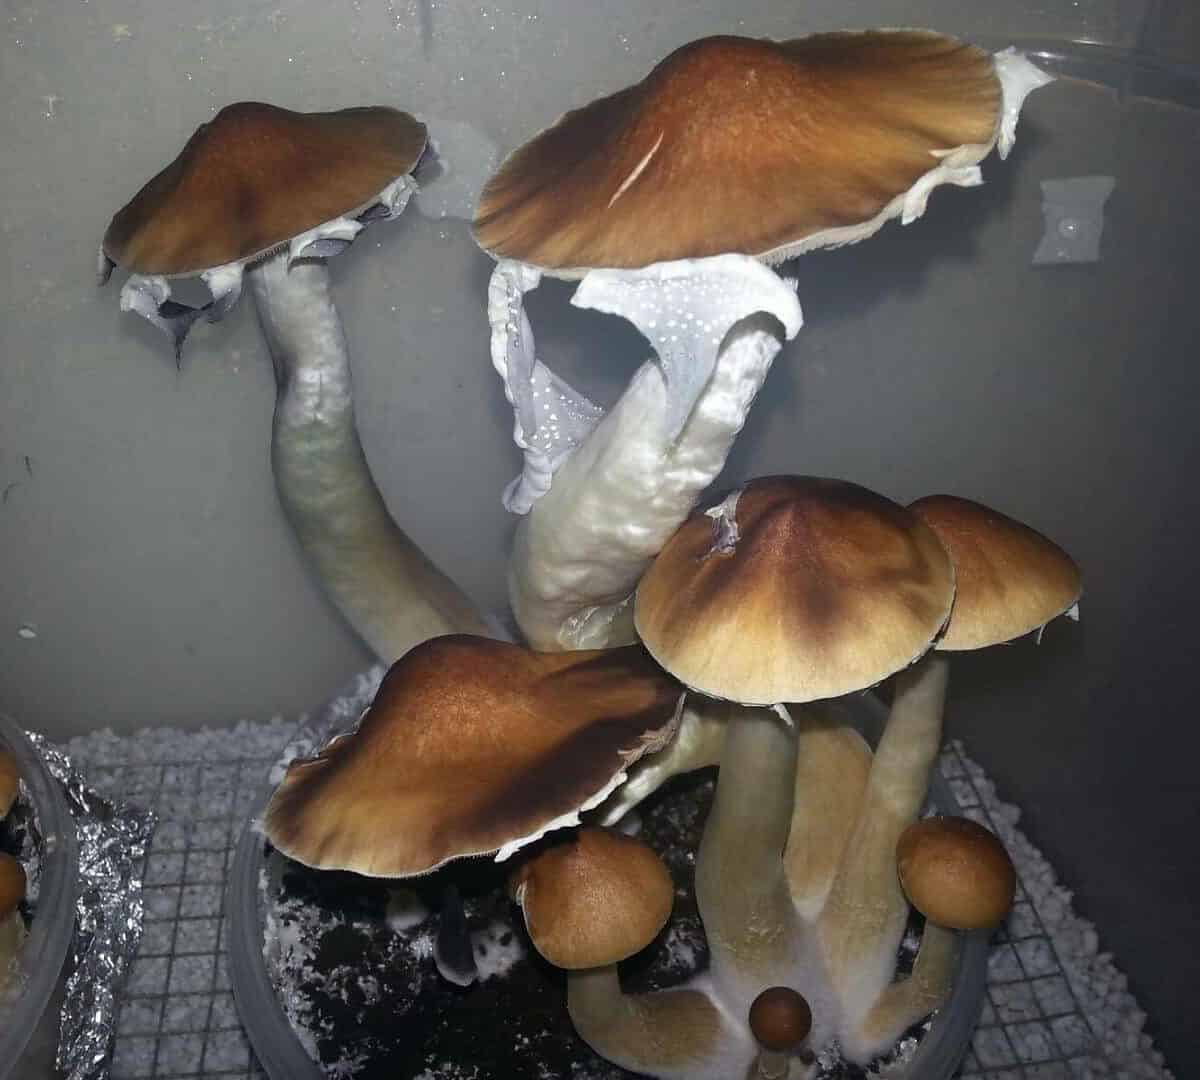 Hawaiian Magic Mushroom special